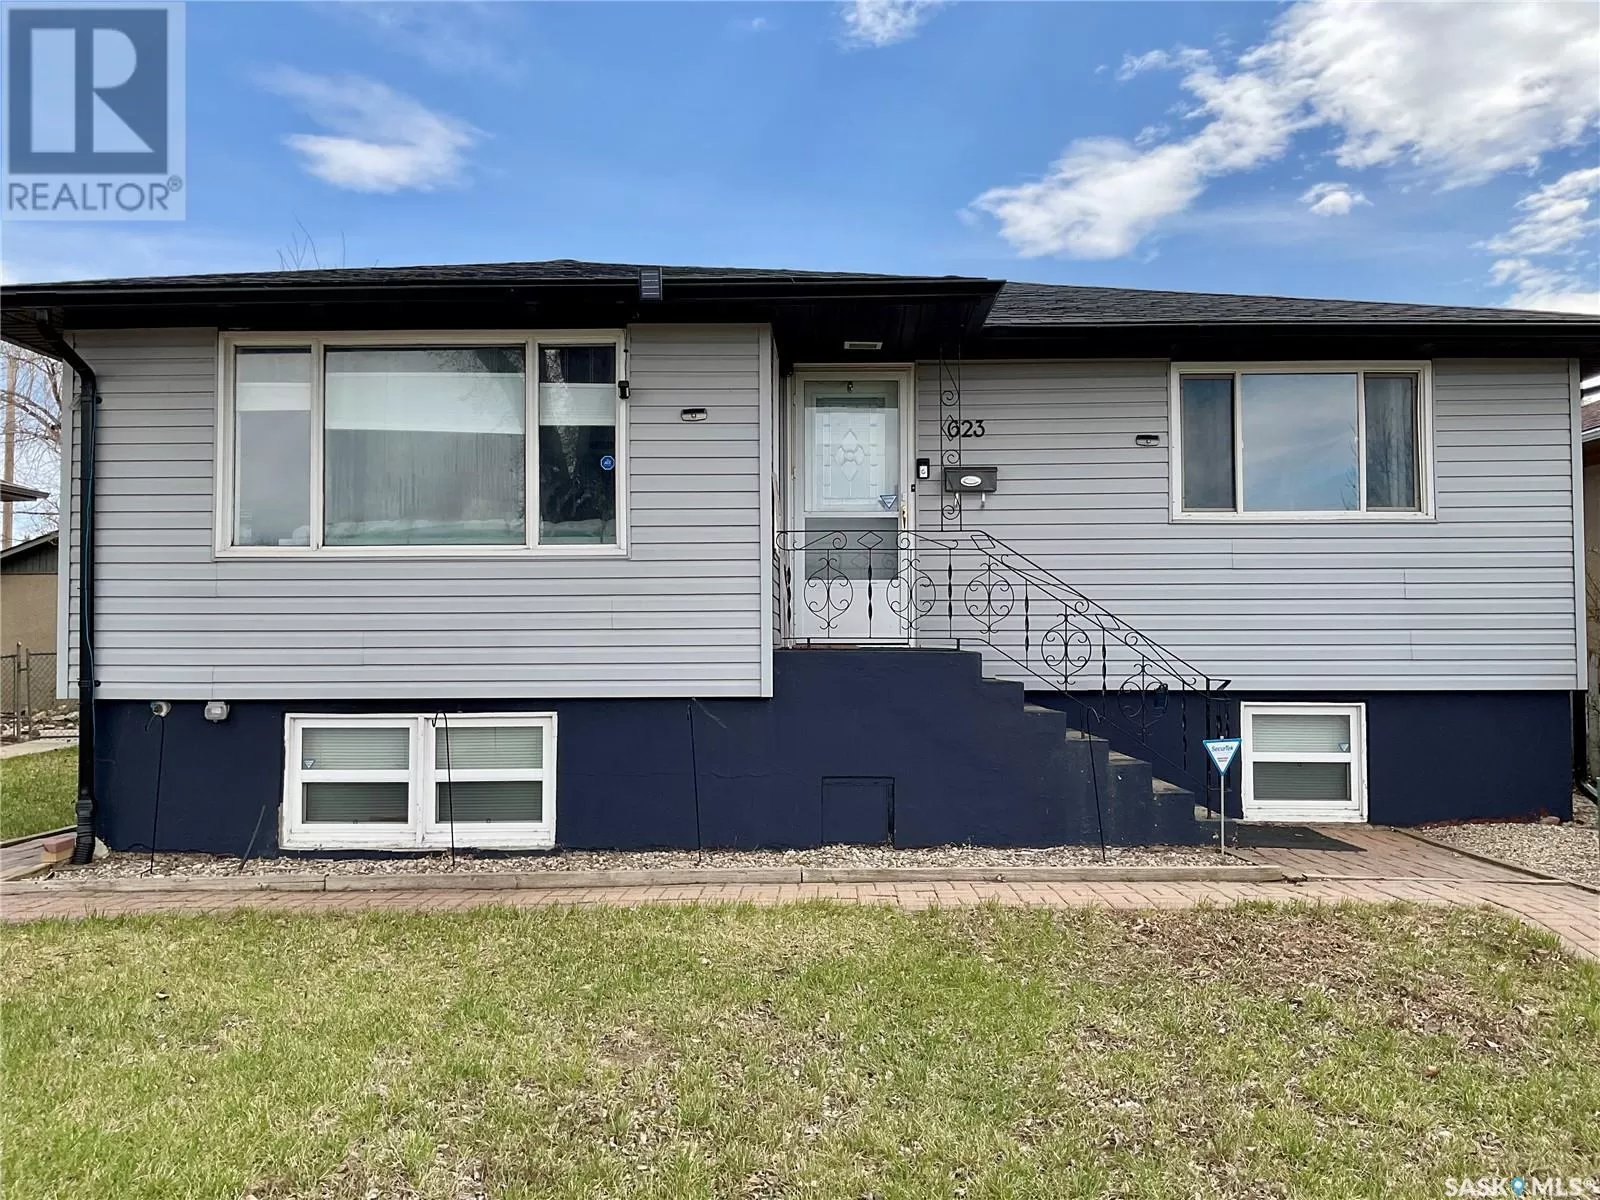 House for rent: 623 College Avenue E, Regina, Saskatchewan S4N 0W3